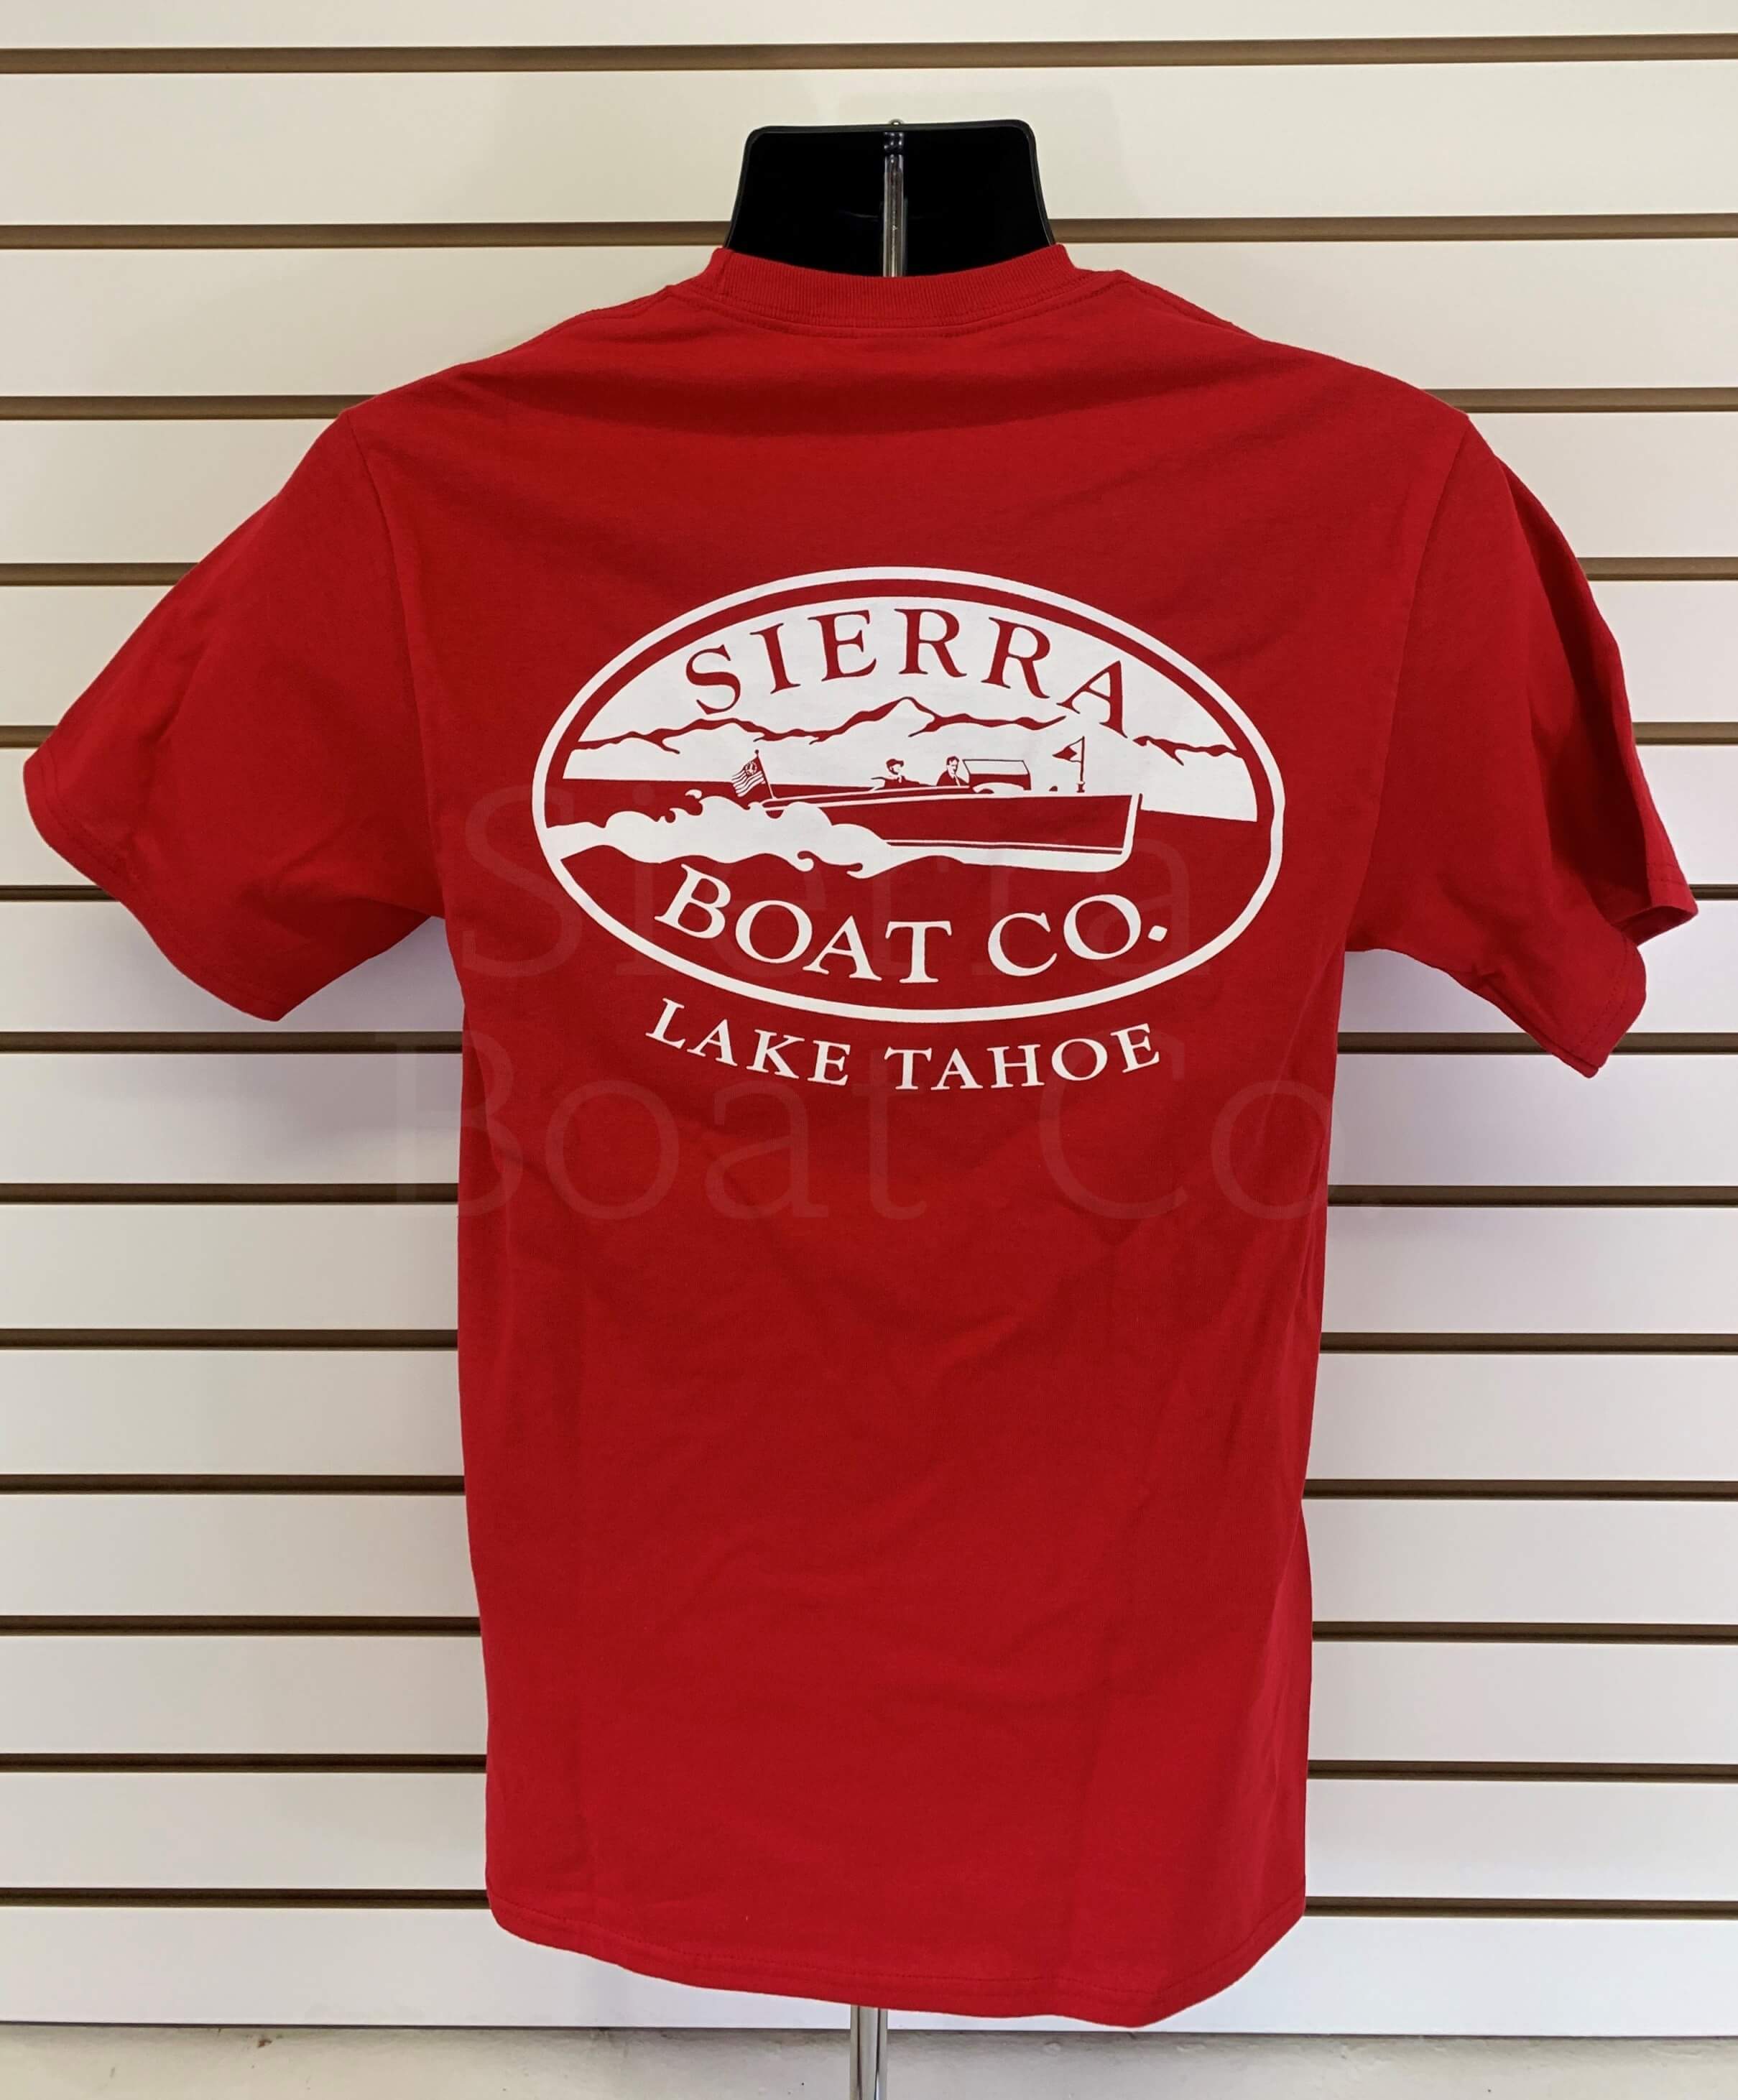 Sierra Classic - red Company T-shirt. Boat